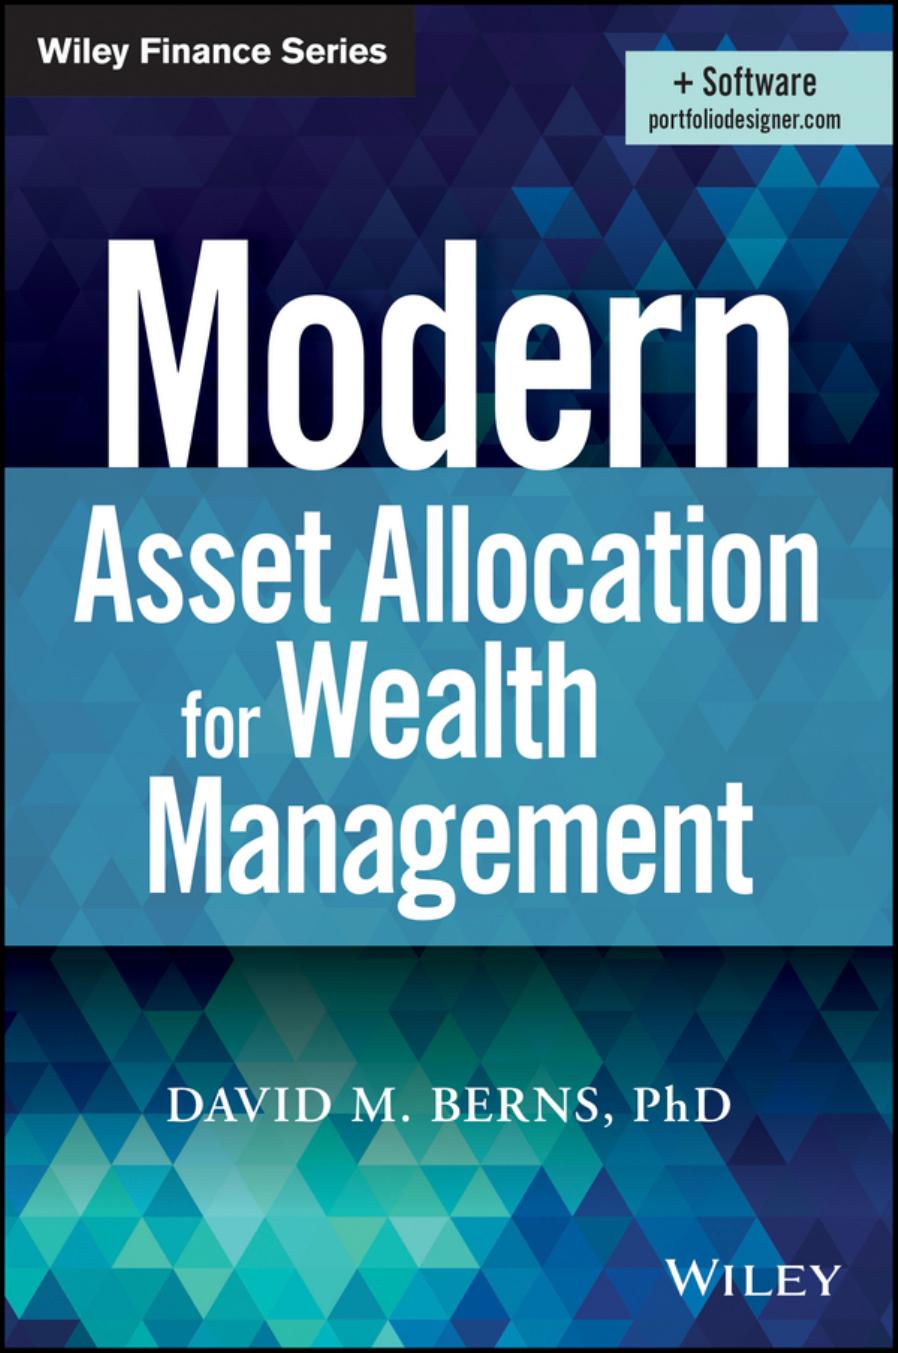 Modern Asset Allocation for Wealth Management by David M. Berns